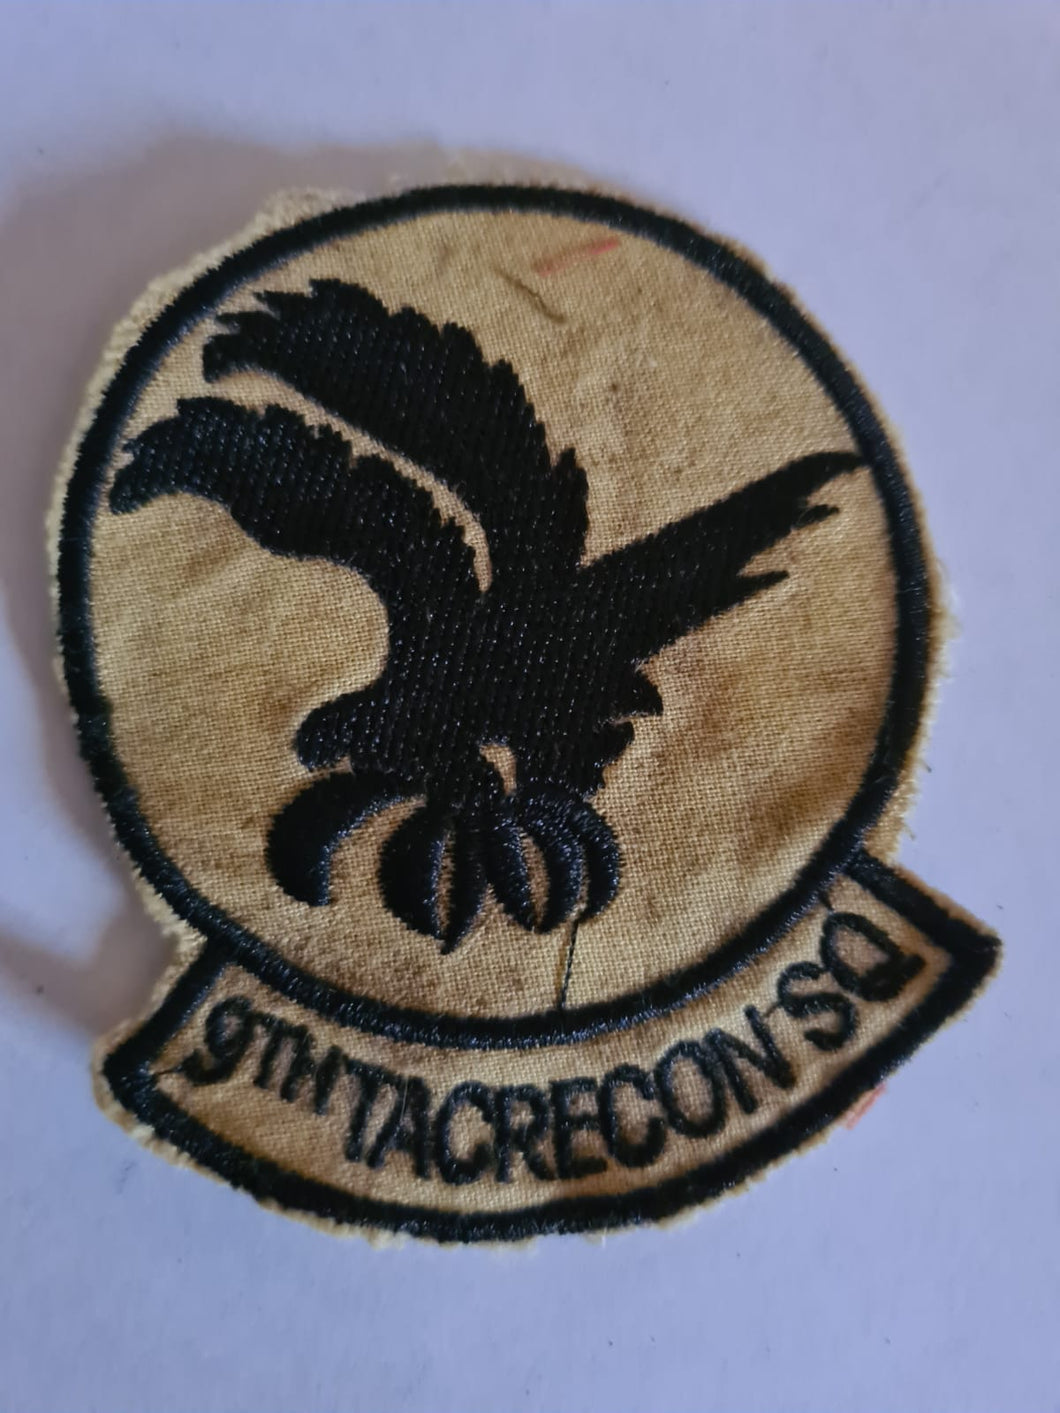 Vietnam war era 9TH Tactical Recon Squadron patch